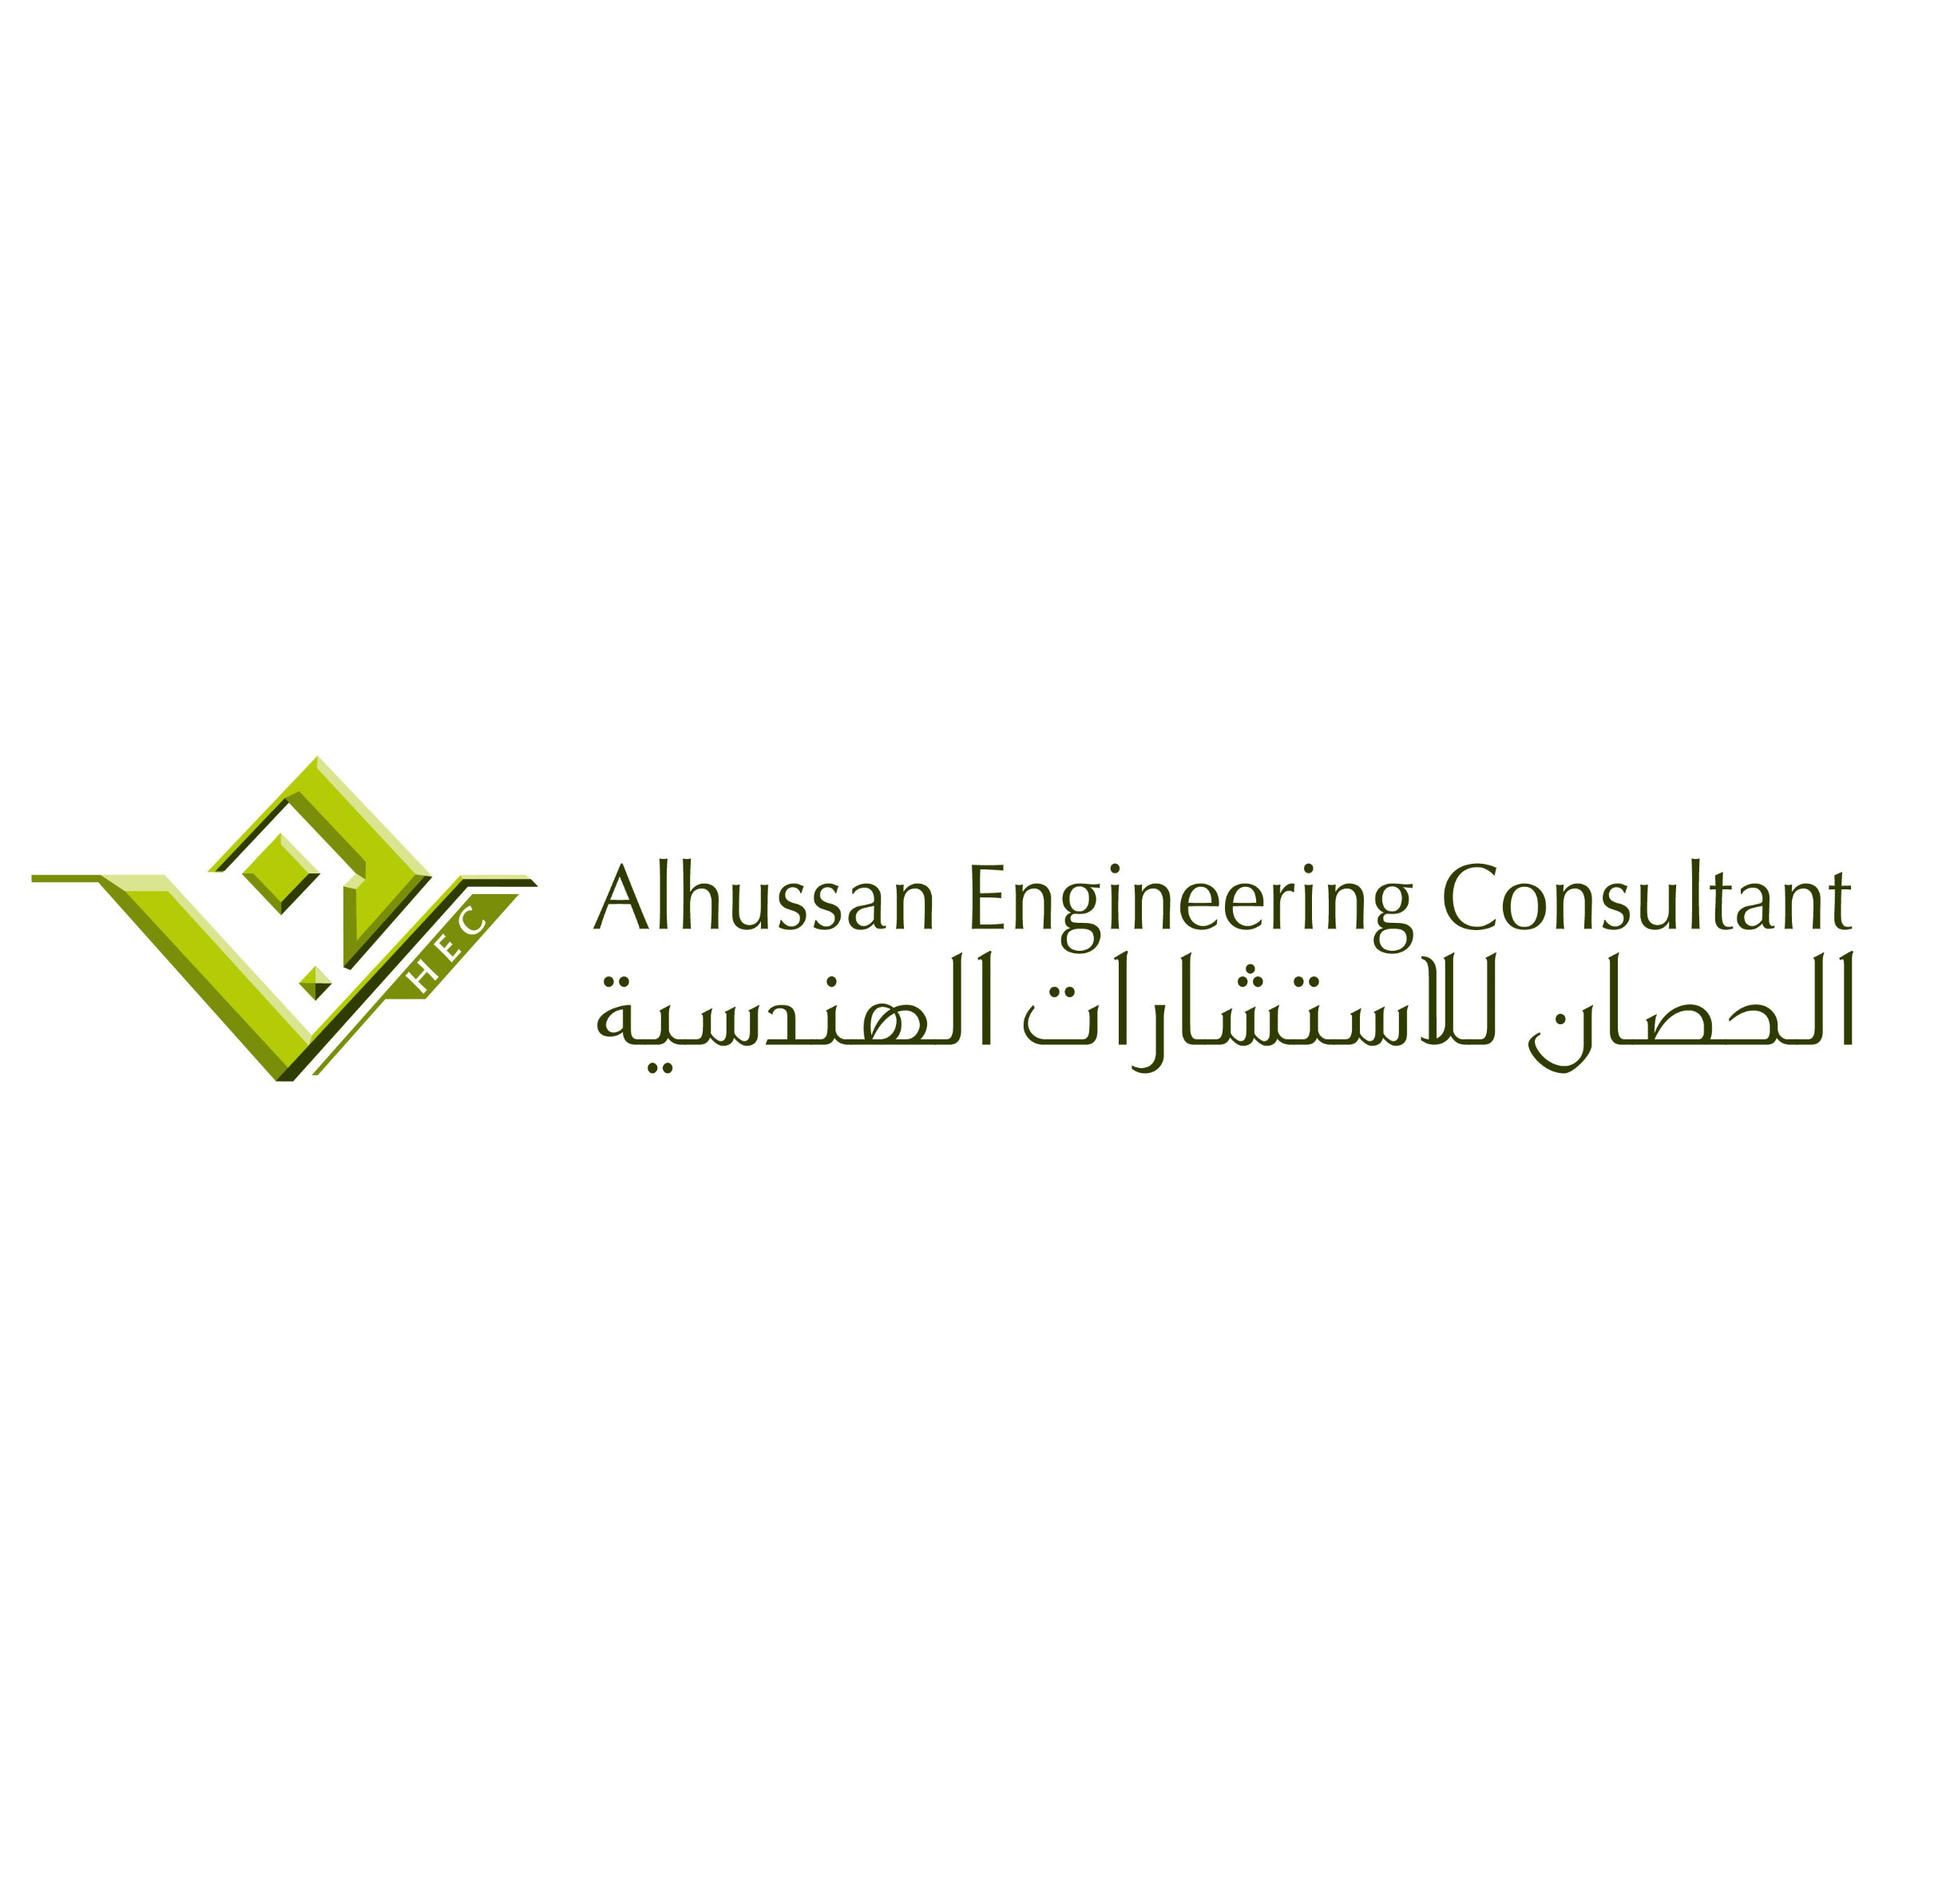 Alhussan Engineering Consultant (HEC)